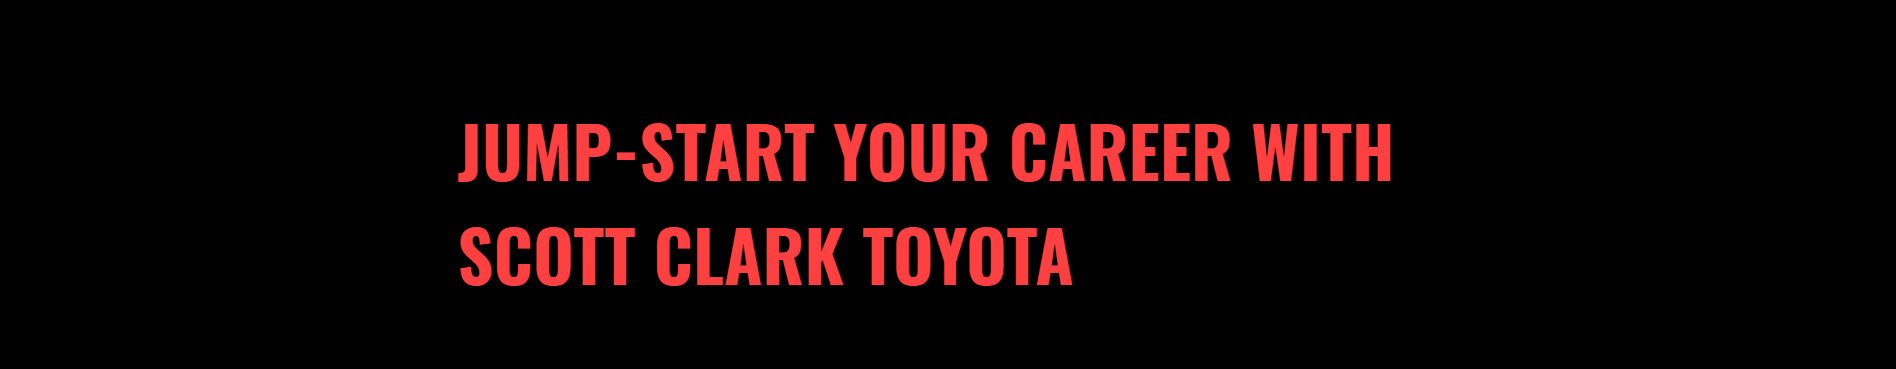 Scott Clark Toyota Careers